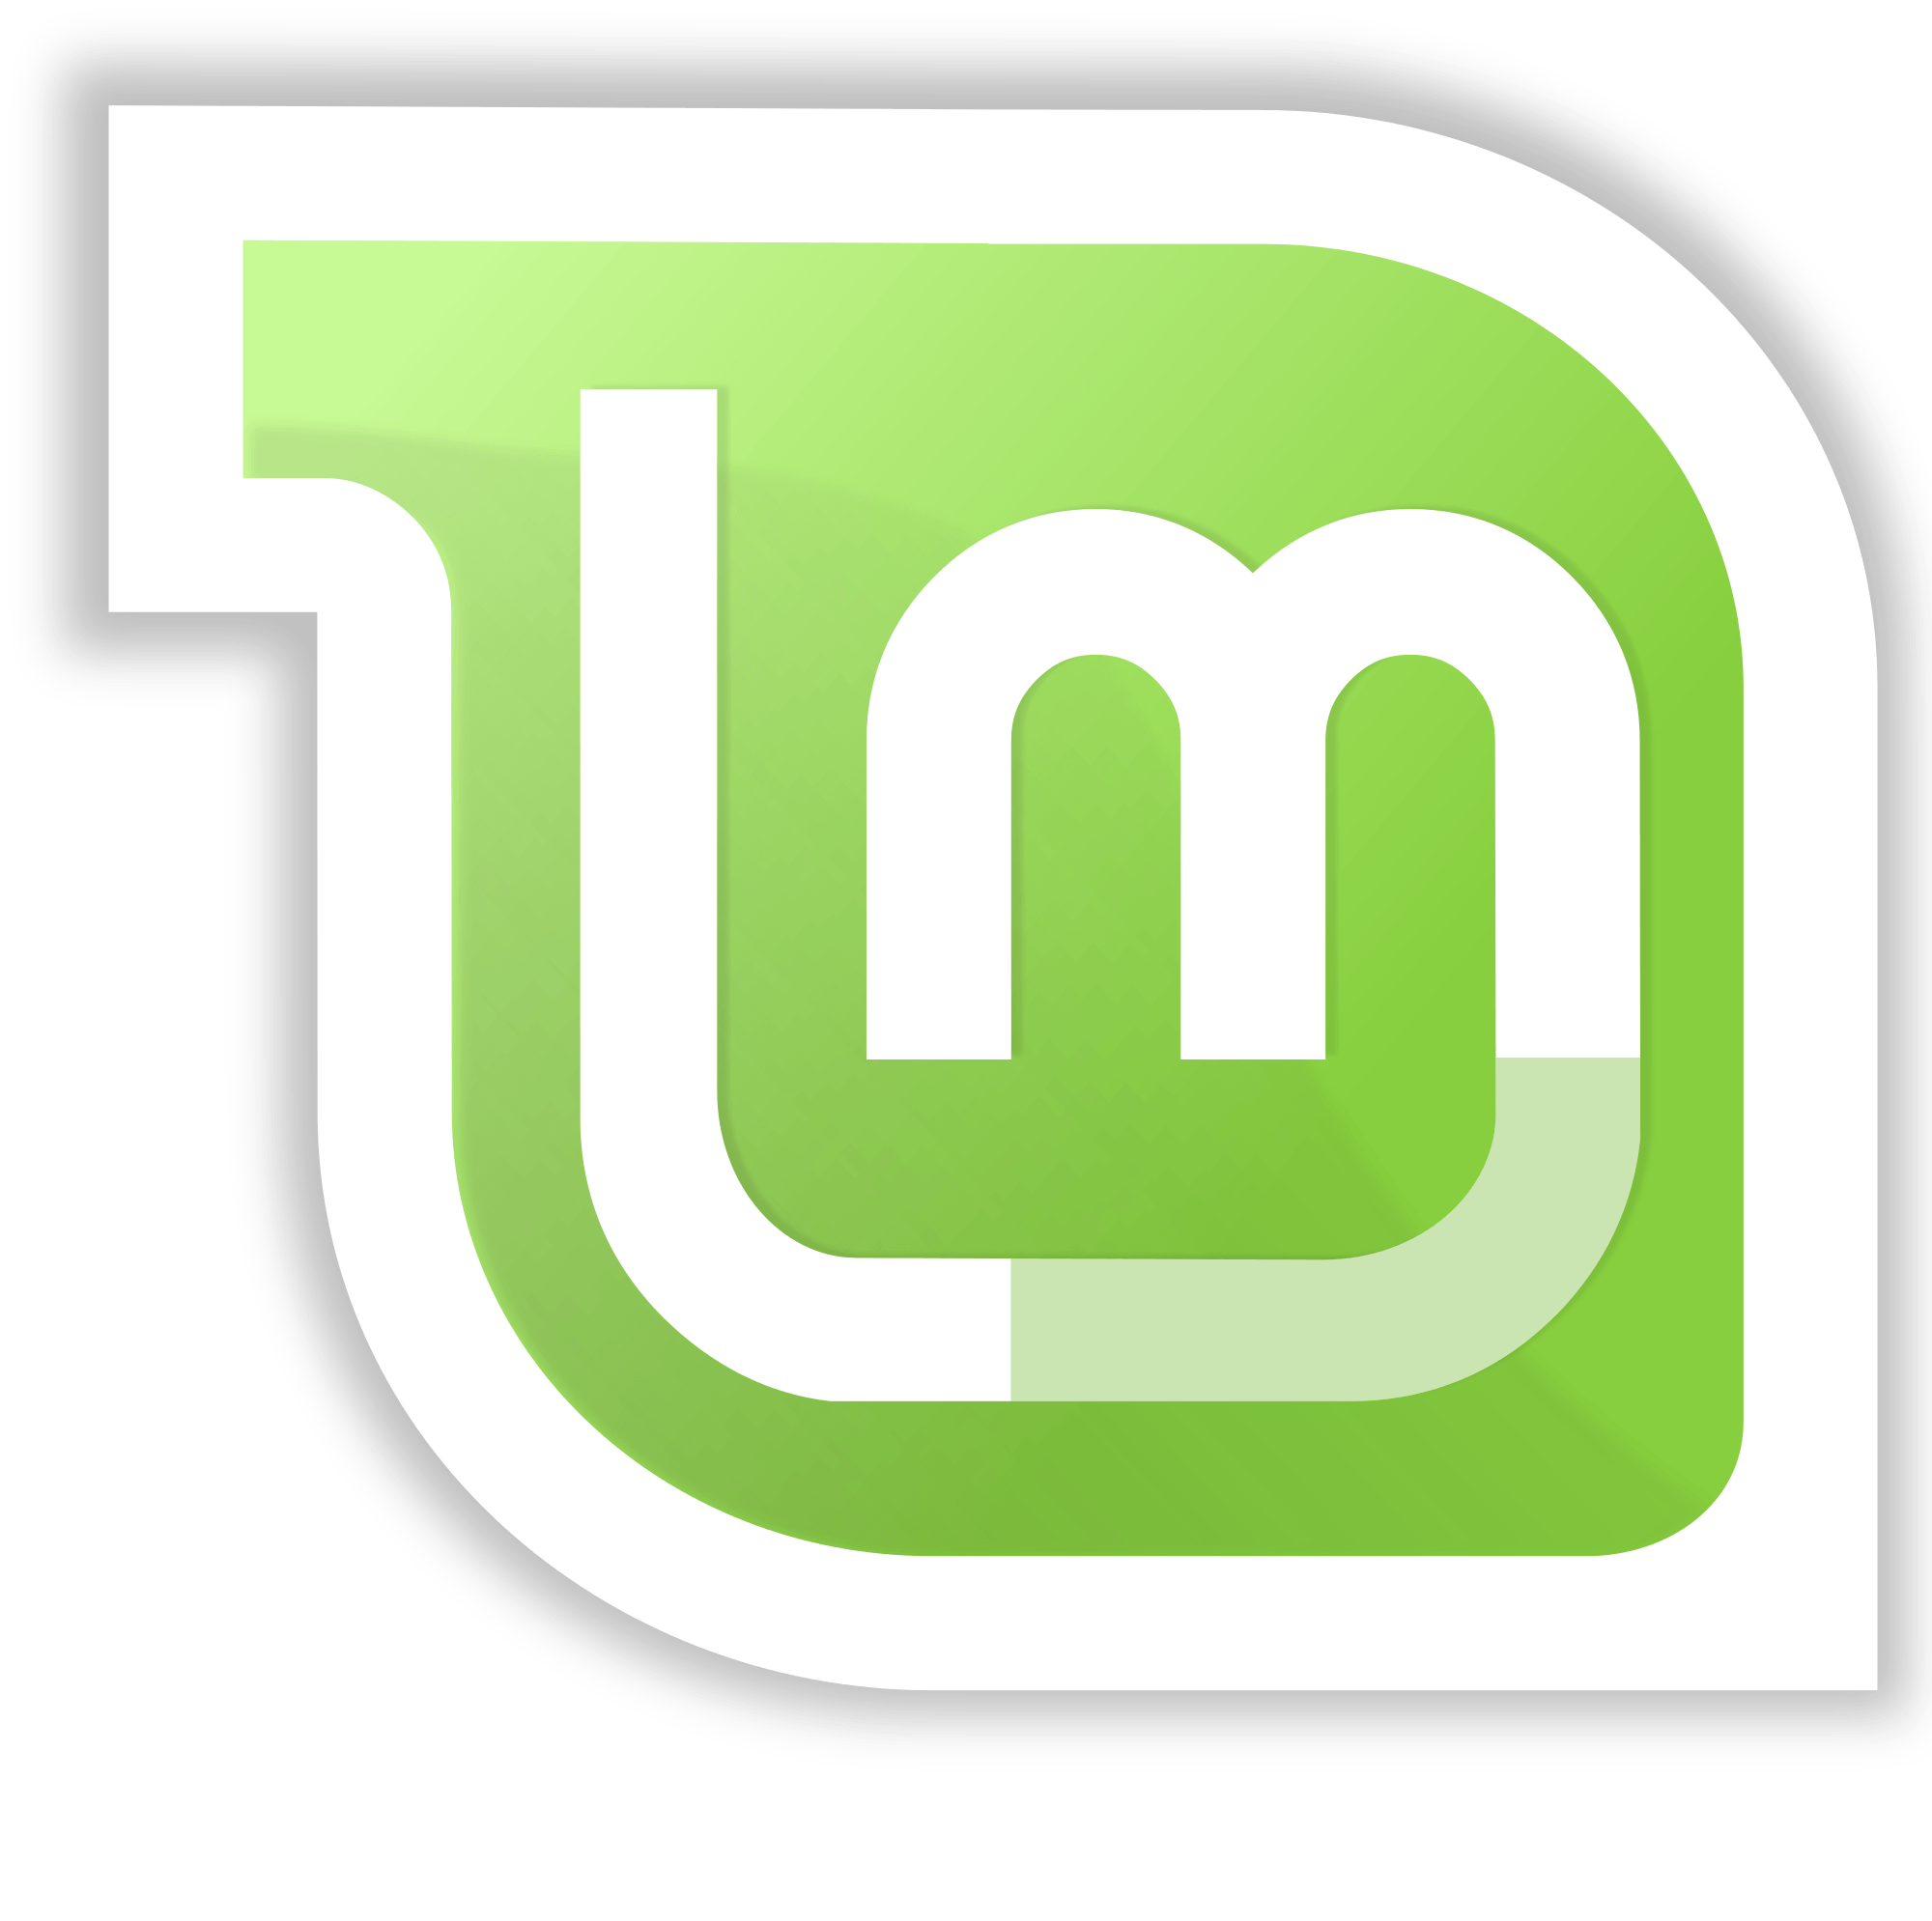 Mint Logo - Linux Mint logo without wordmark.svg